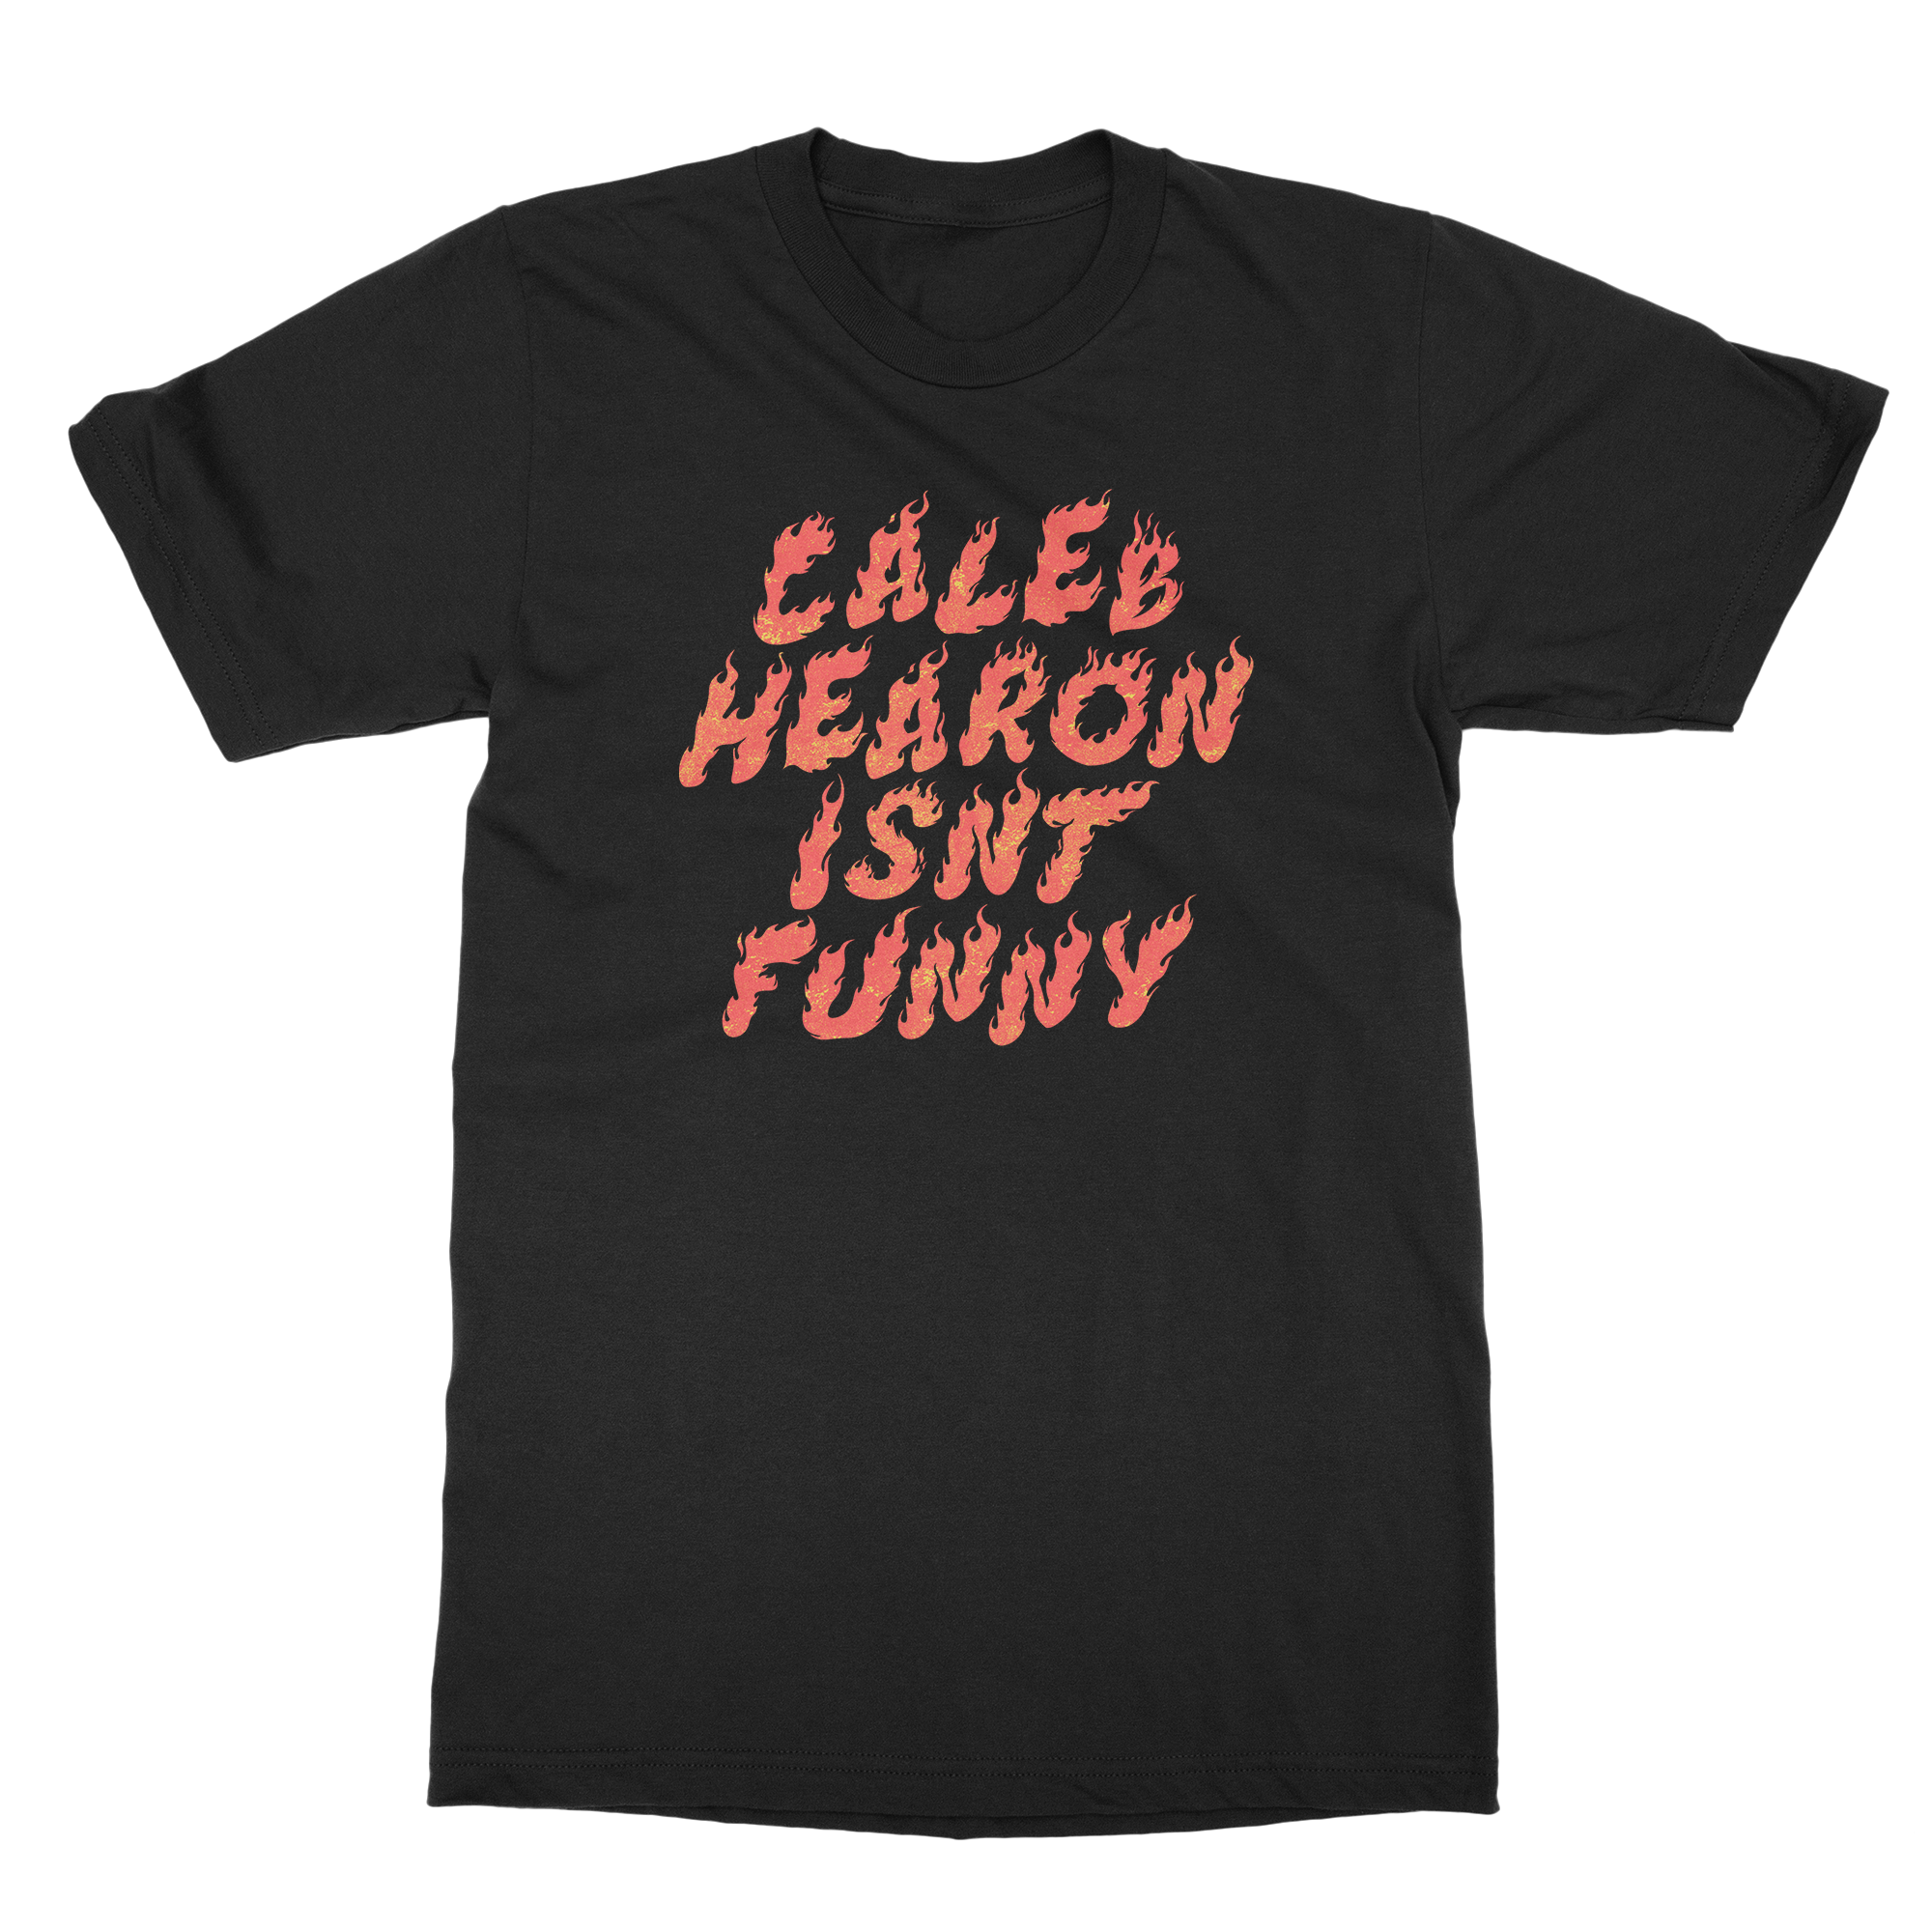 Caleb Hearon | Caleb Hearon Isn't Funny T-Shirt - Black